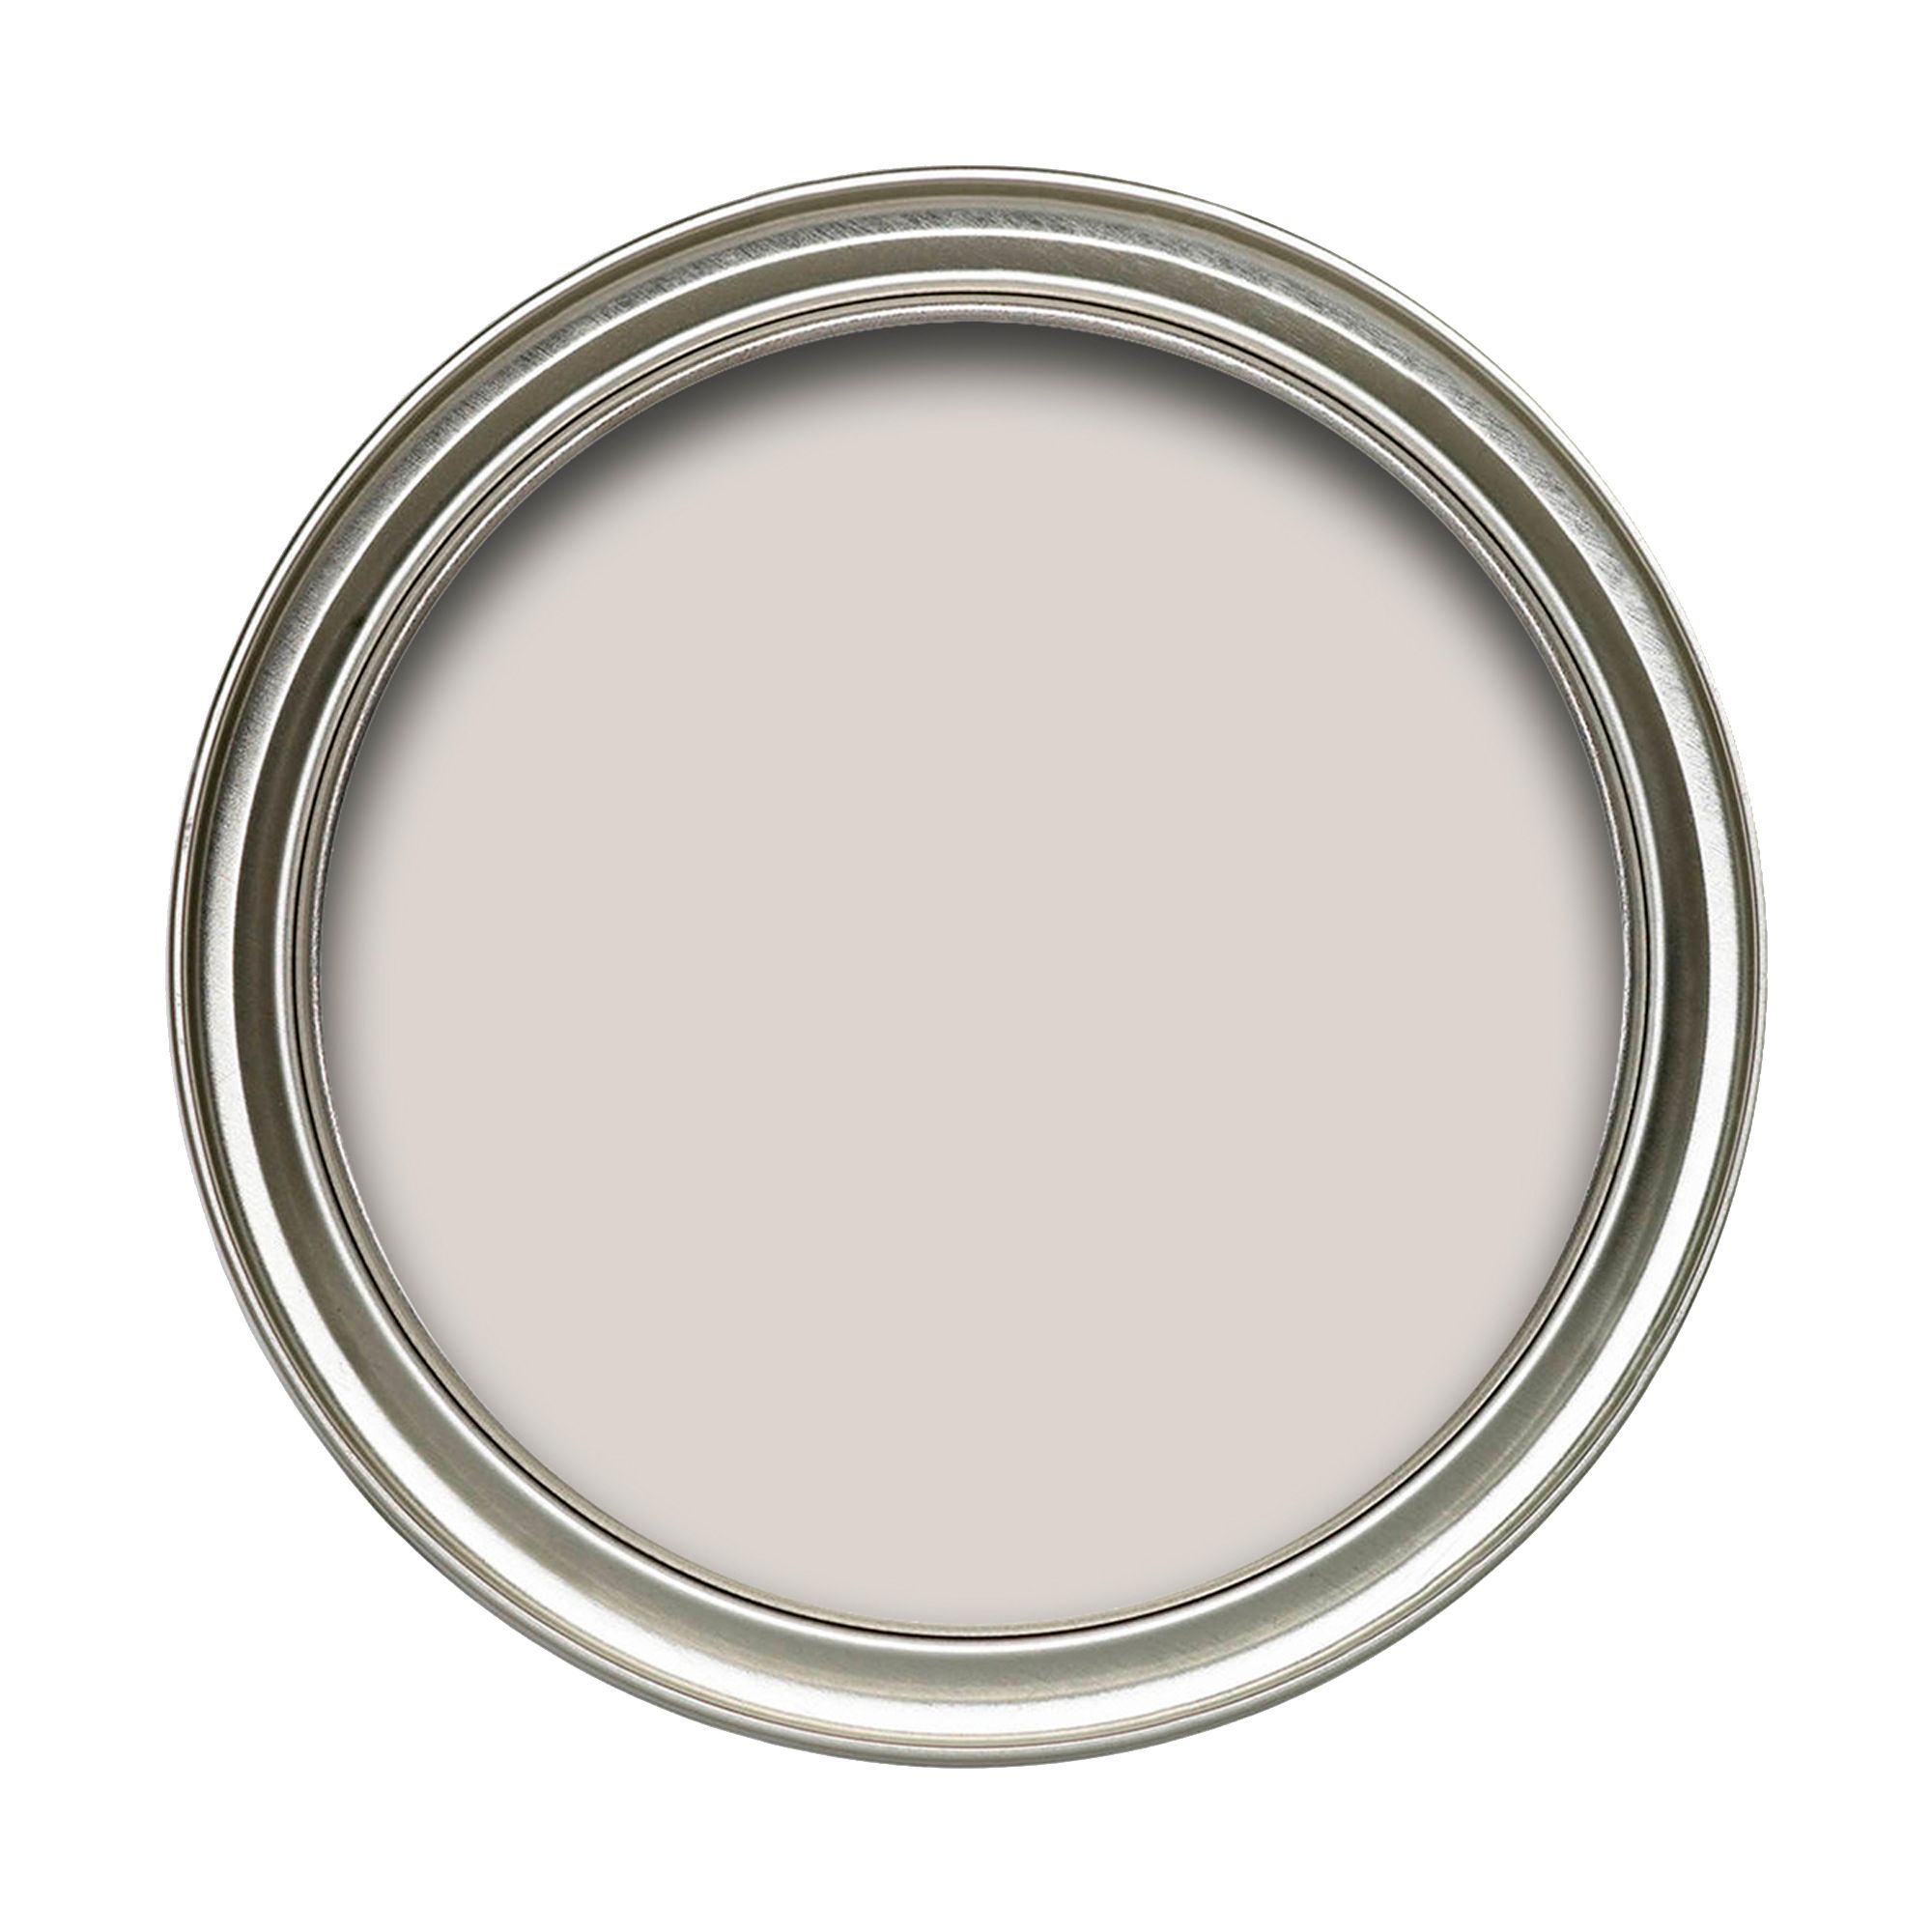 Dulux Moda Little heron Flat matt Emulsion paint, 30ml